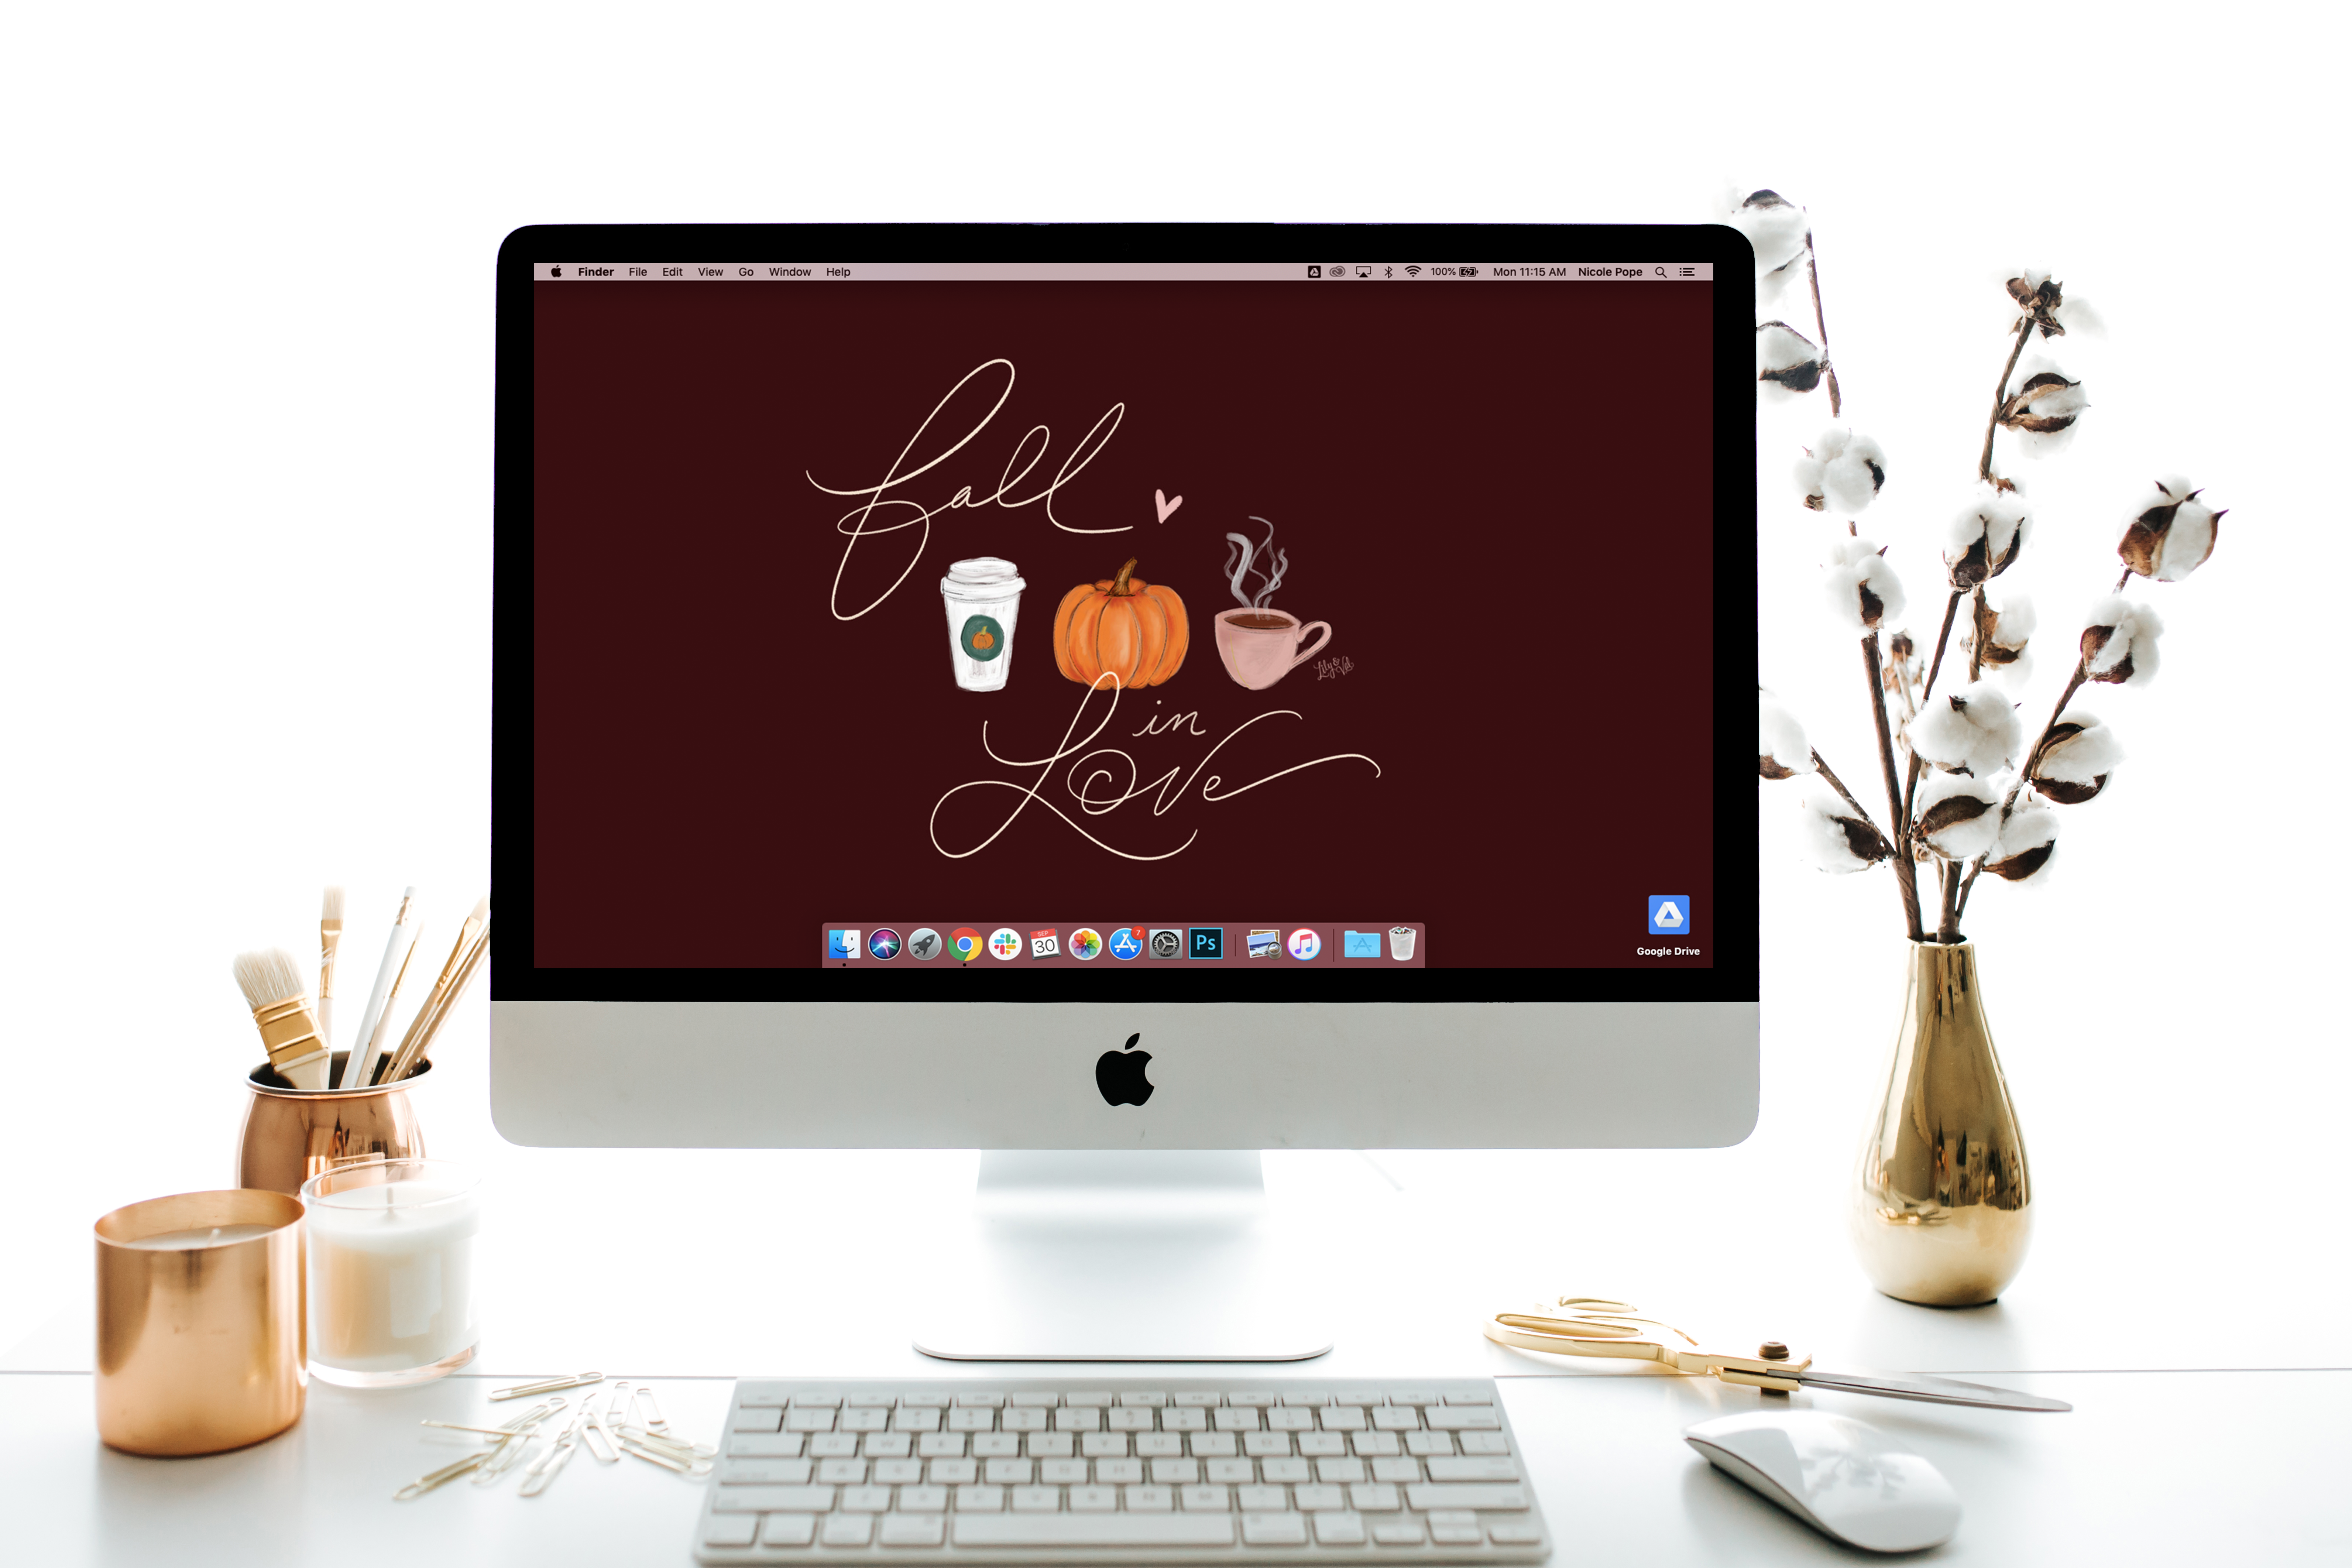 October’s “Fall in Love” Desktop Download